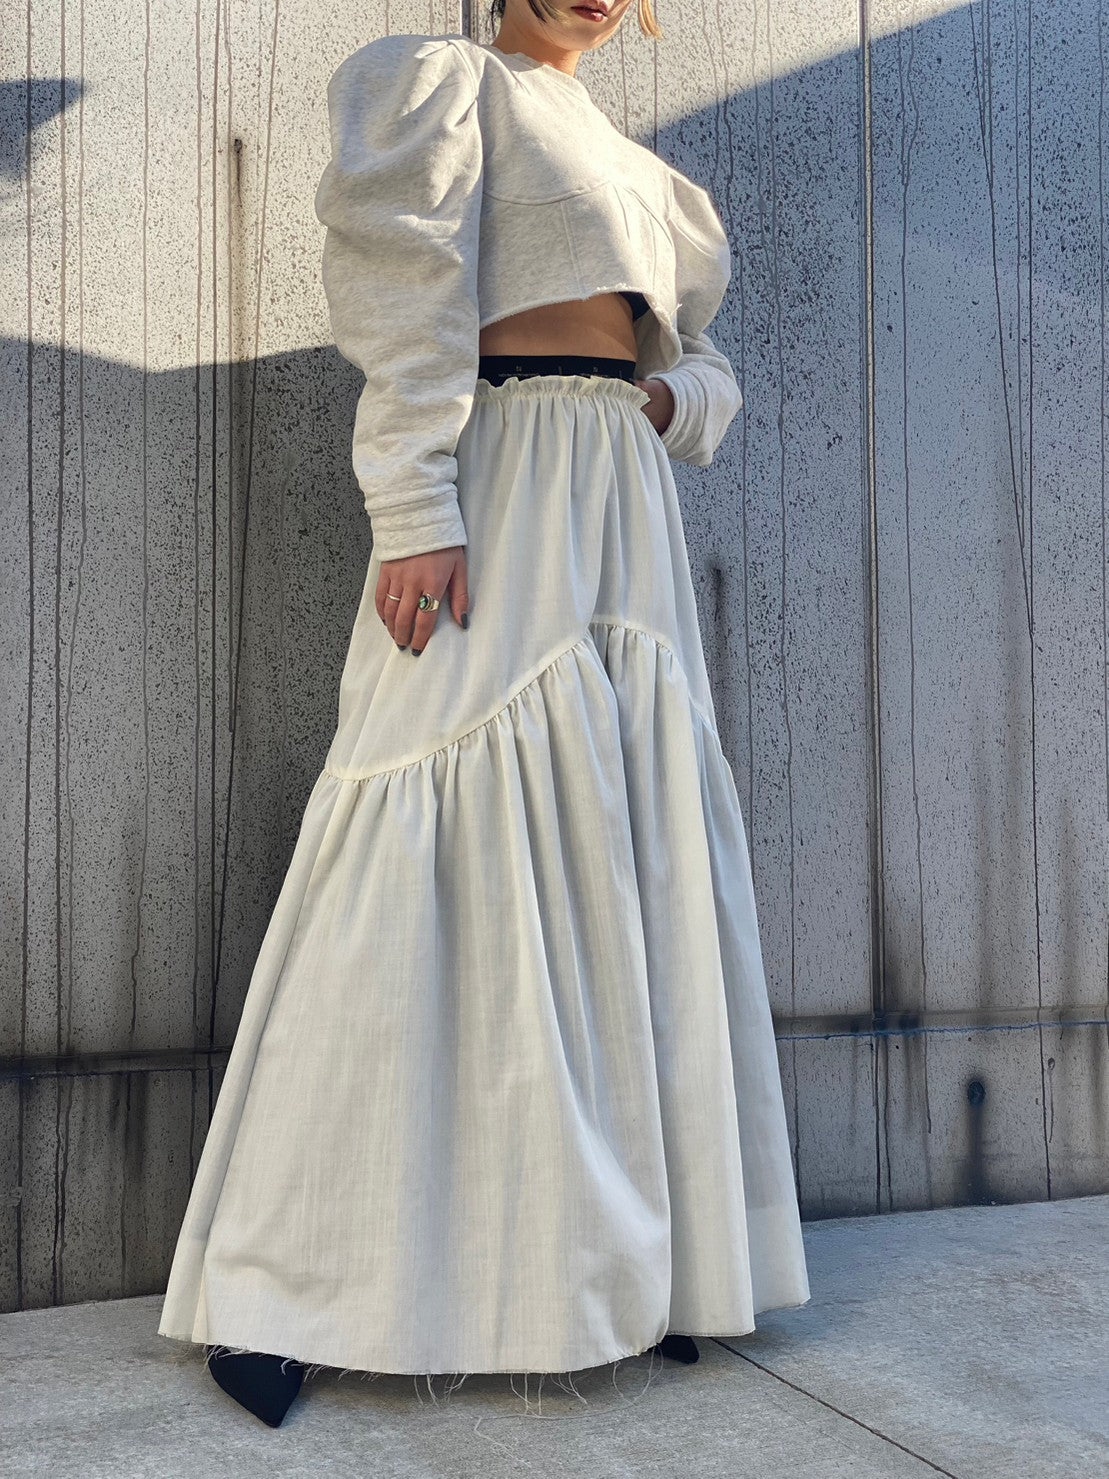 Stripe Taffeta Skirt(Gray)